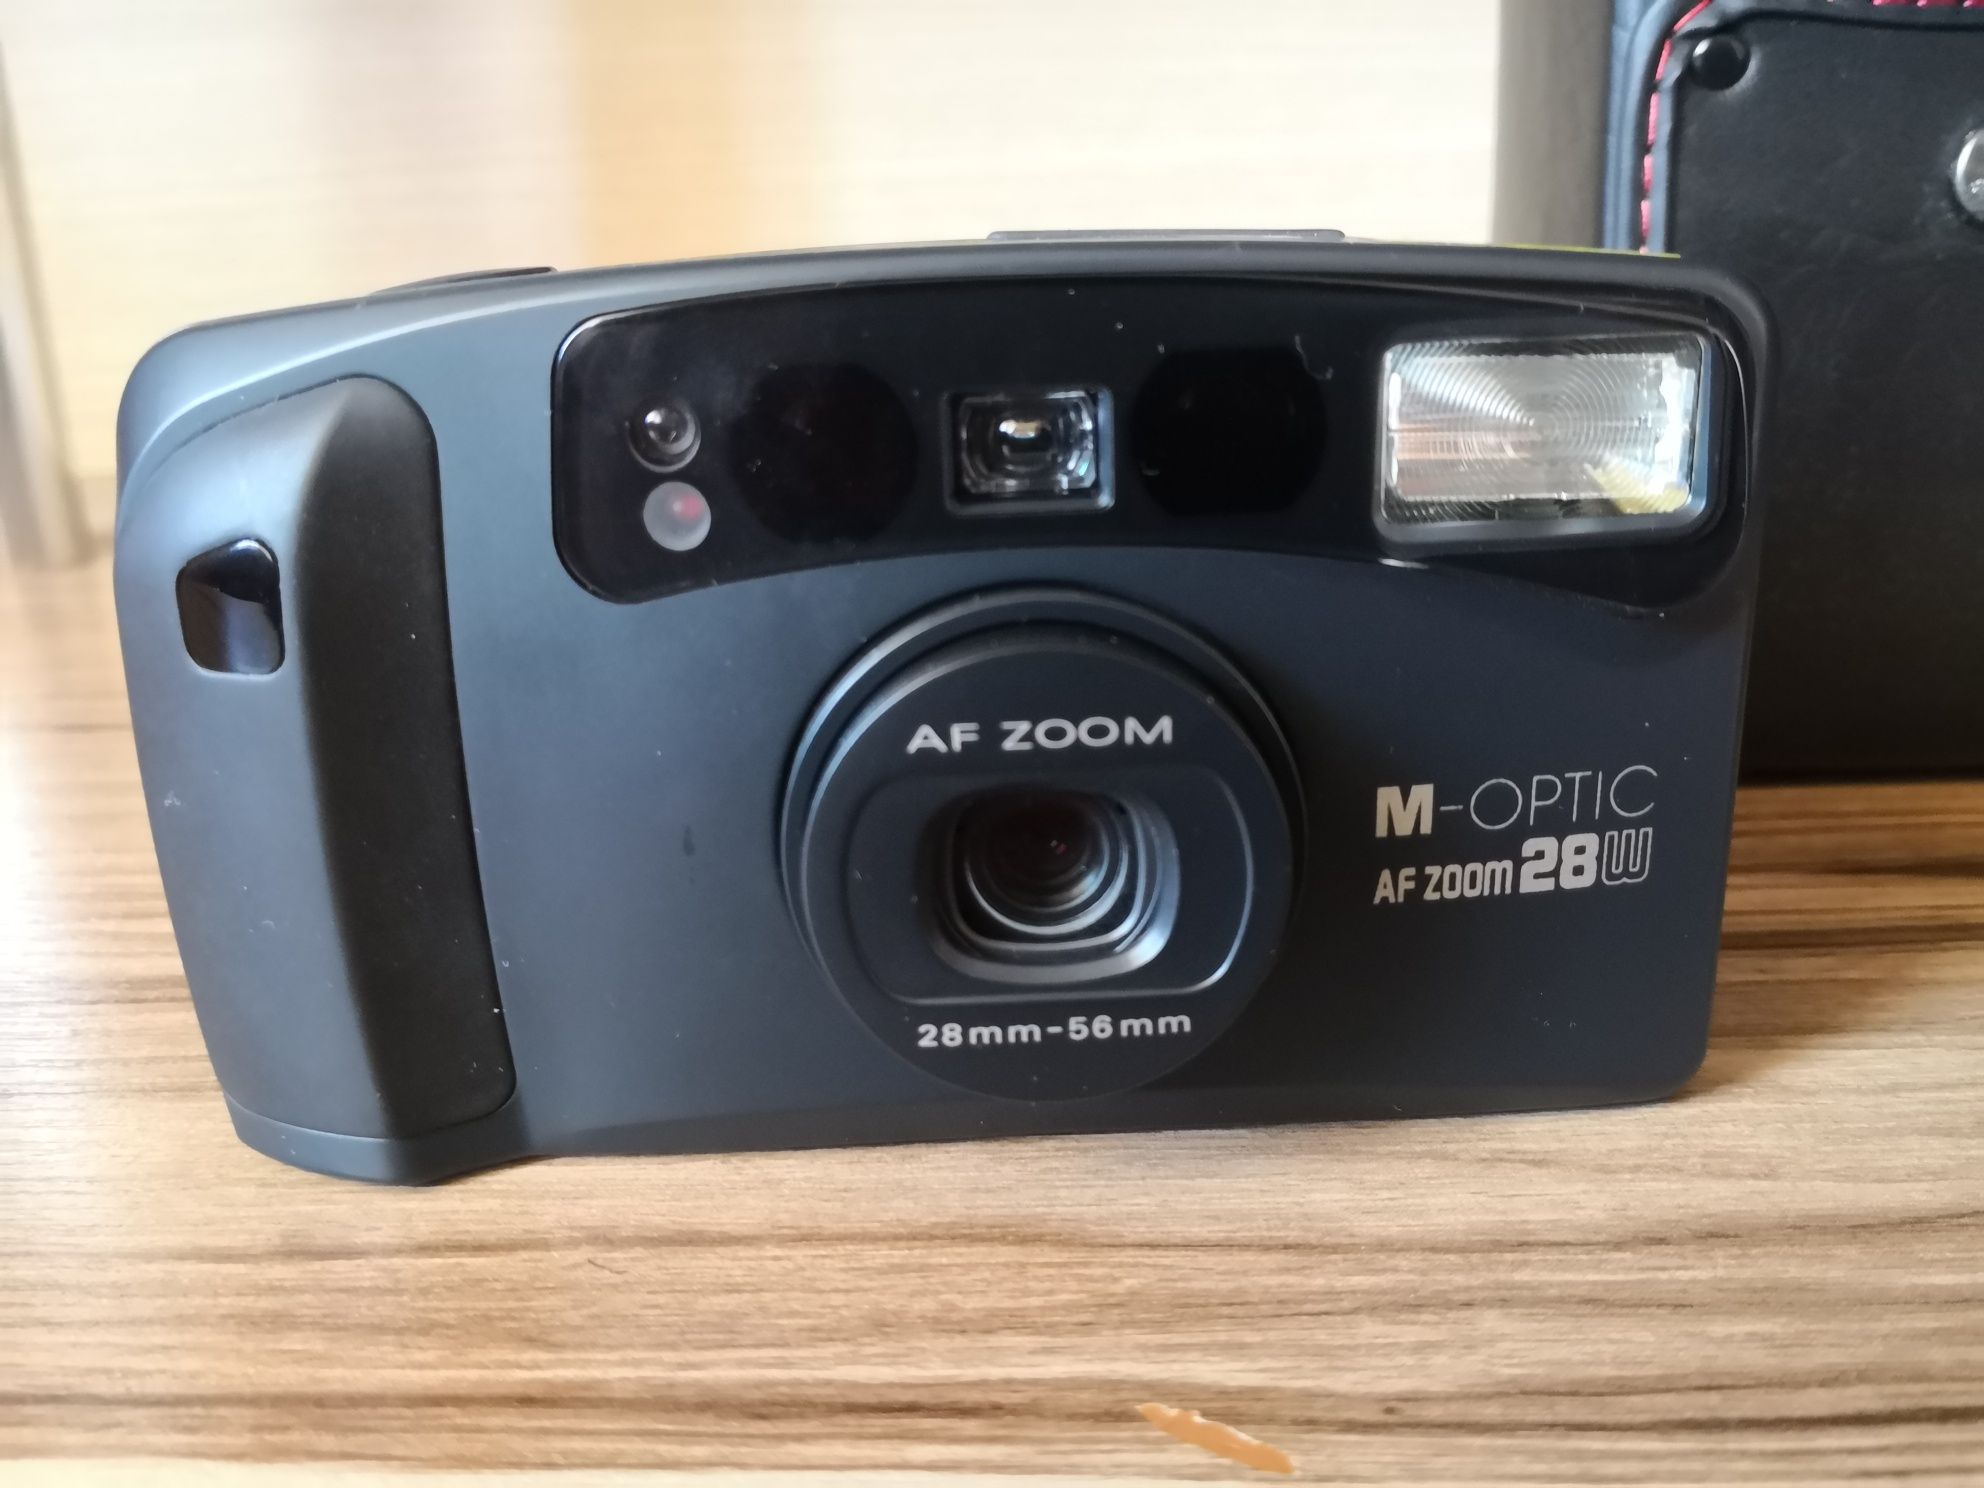 M-Optic af zoom 28w